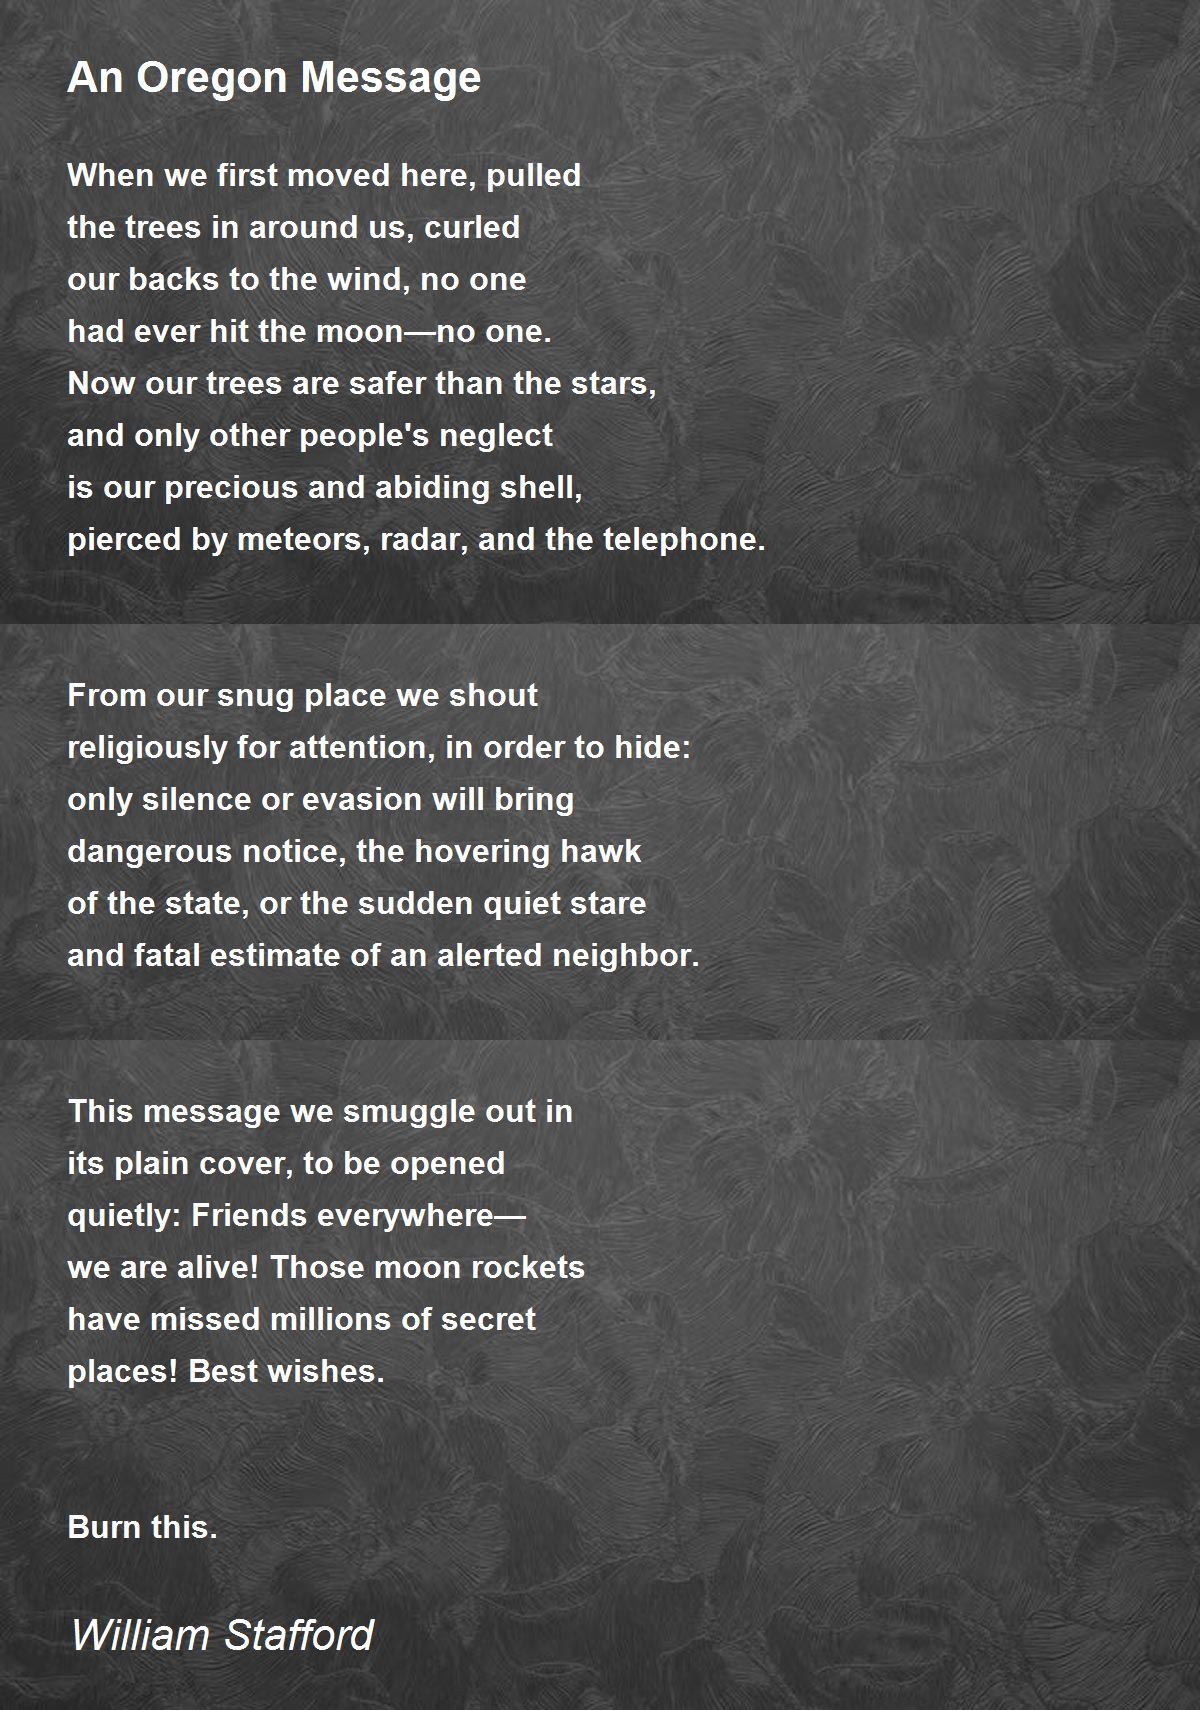 An Oregon Message Poem by William Stafford - Poem Hunter